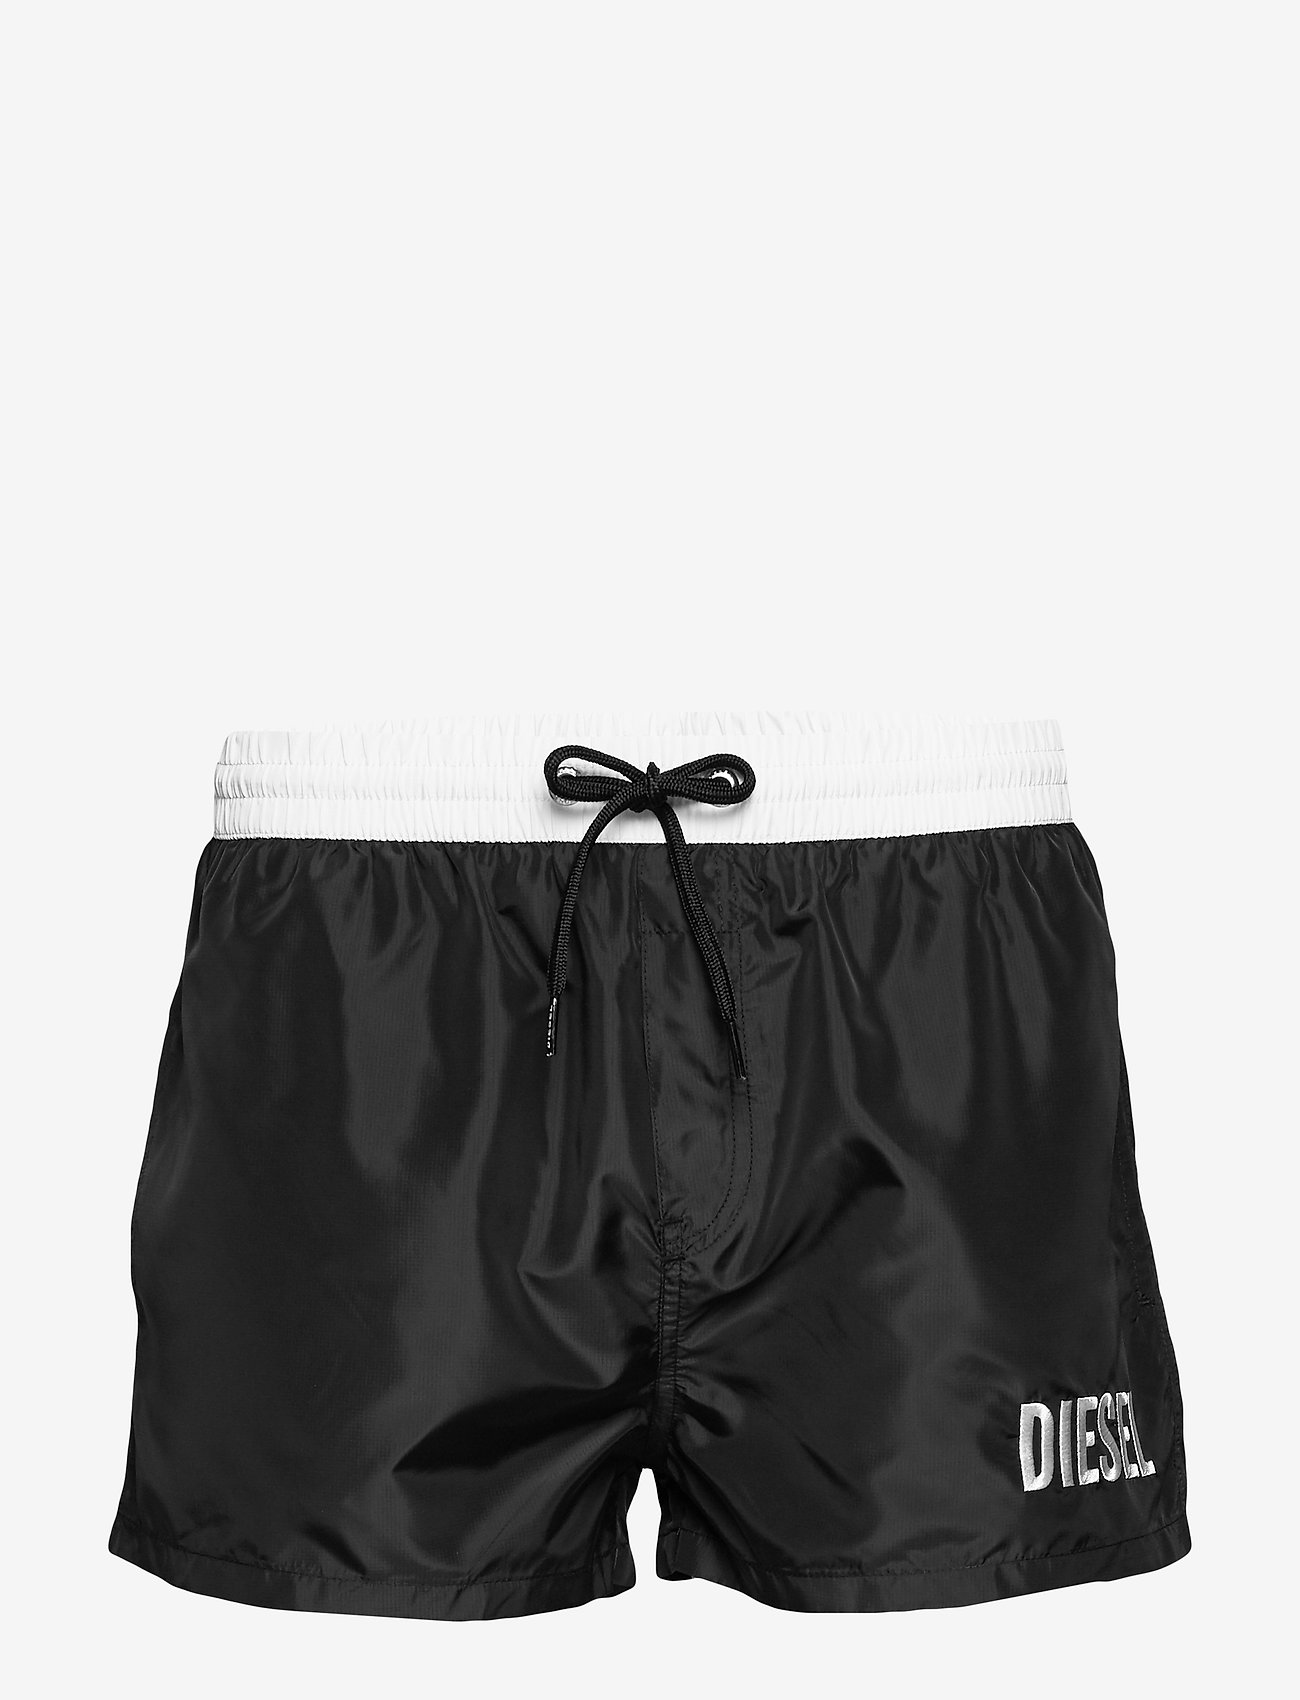 mens diesel swim shorts